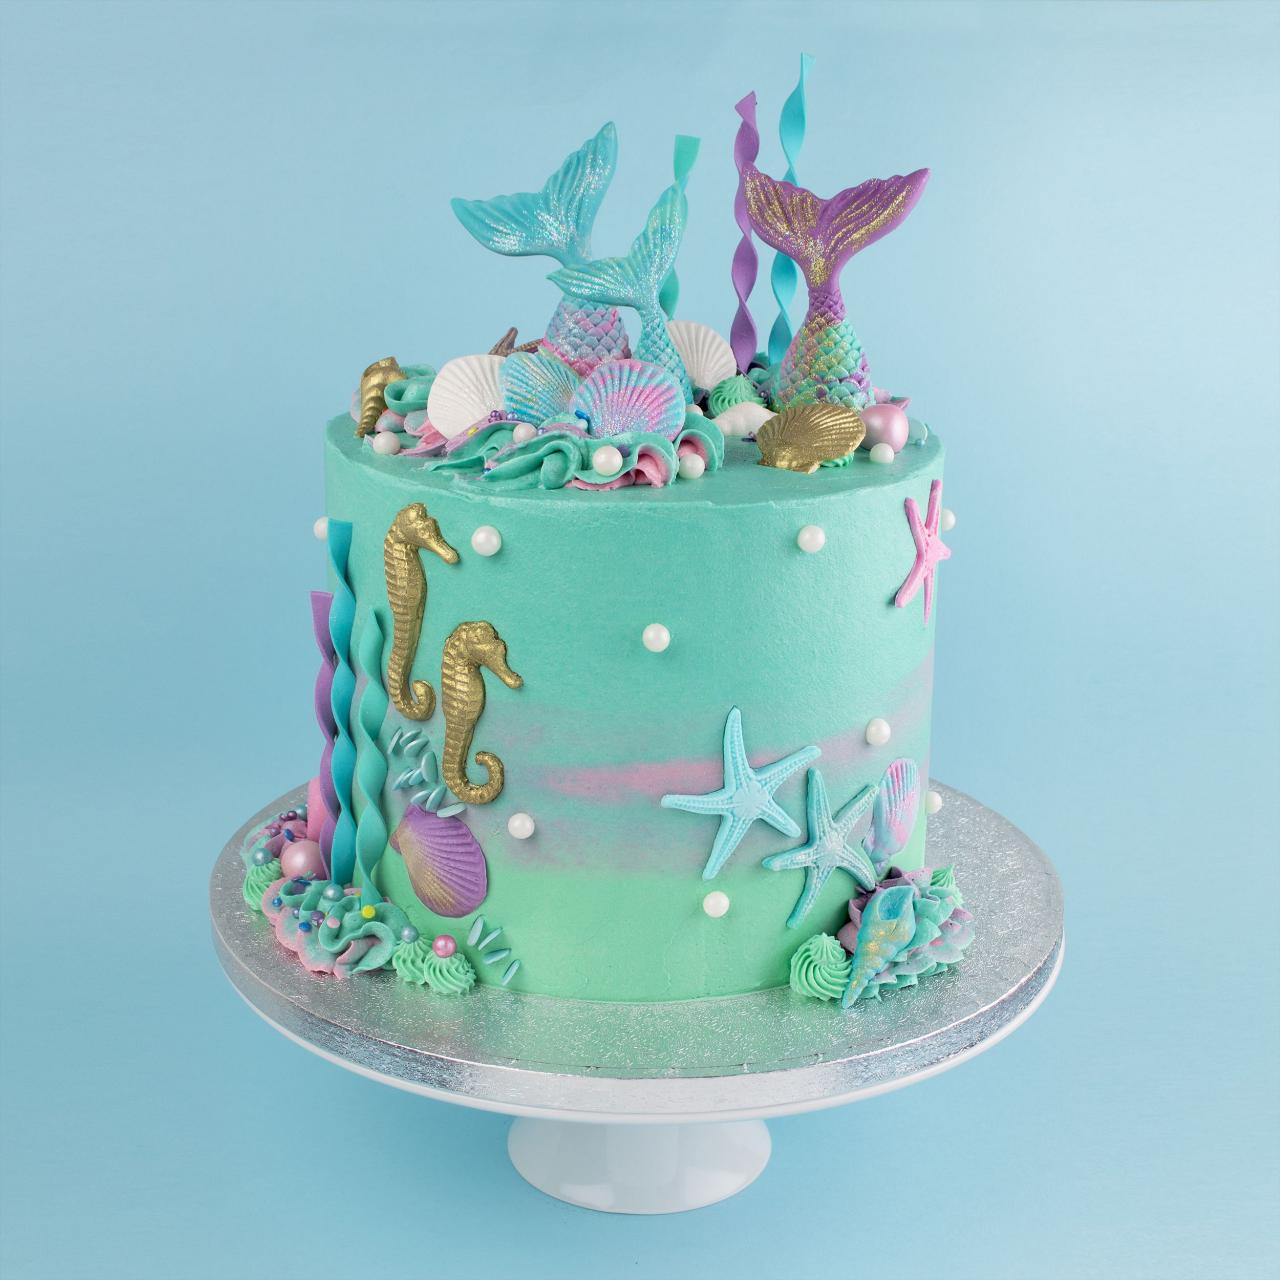 Little mermaid cake decorations